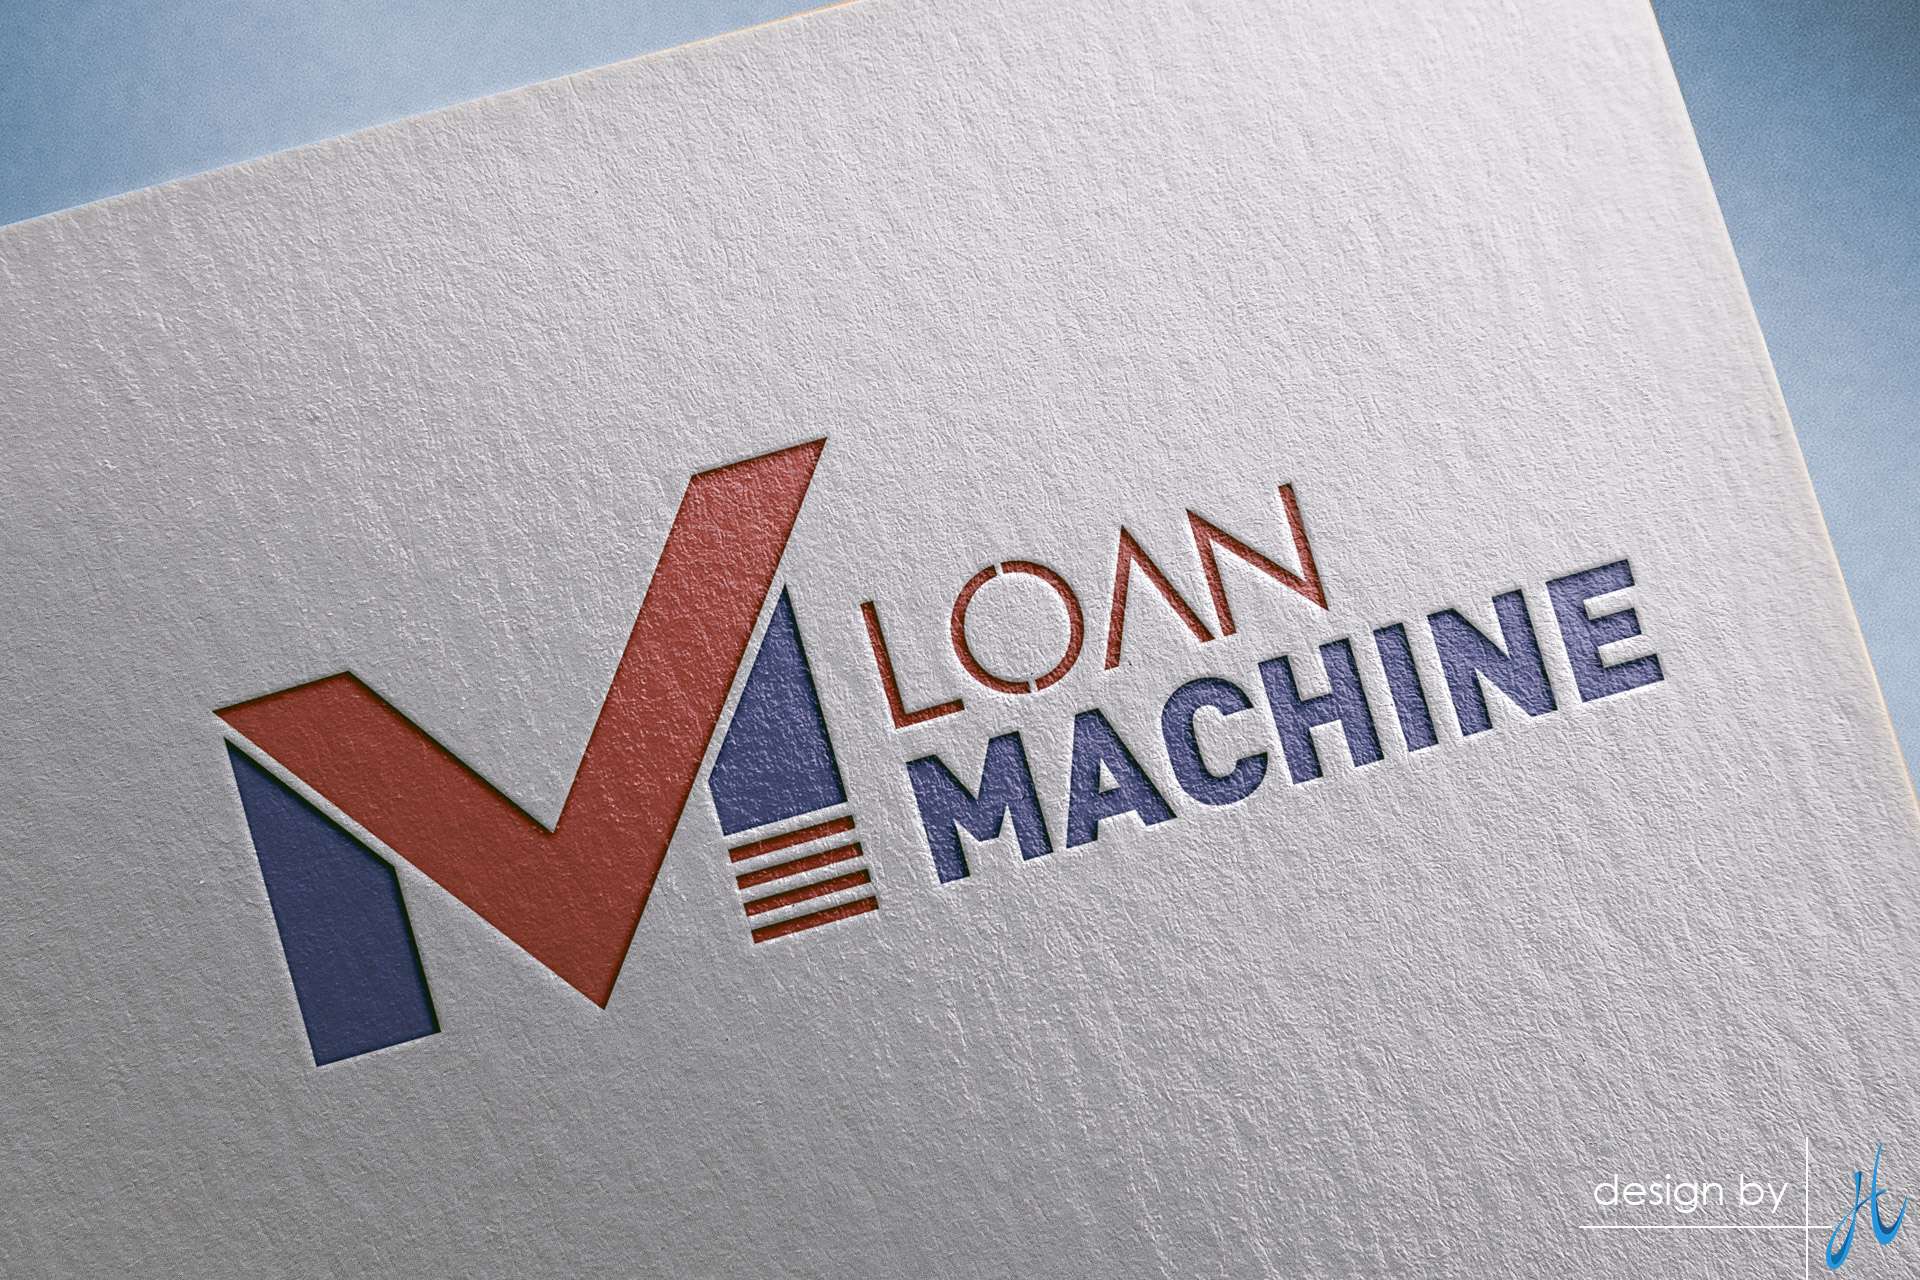 Loan Machine